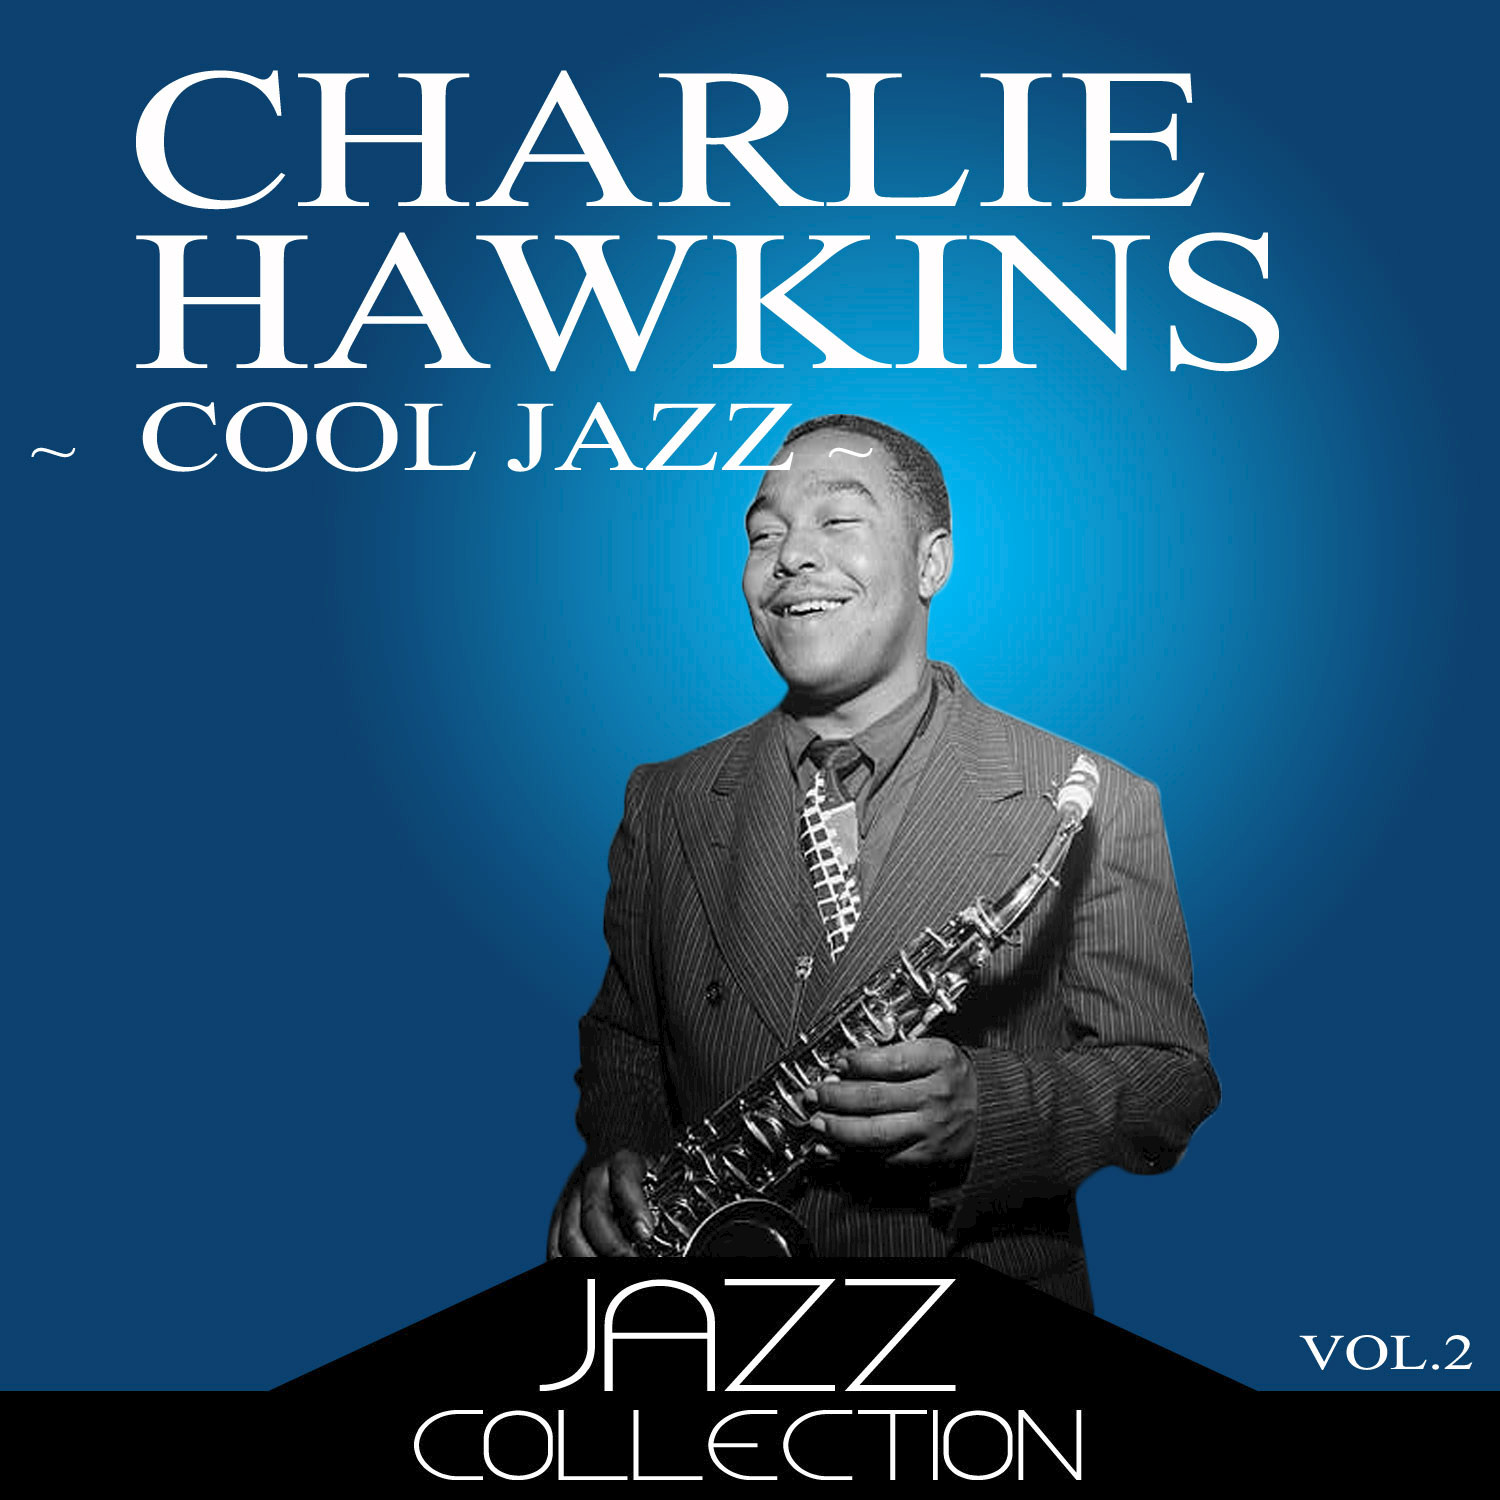 Cool Jazz Vol. 2